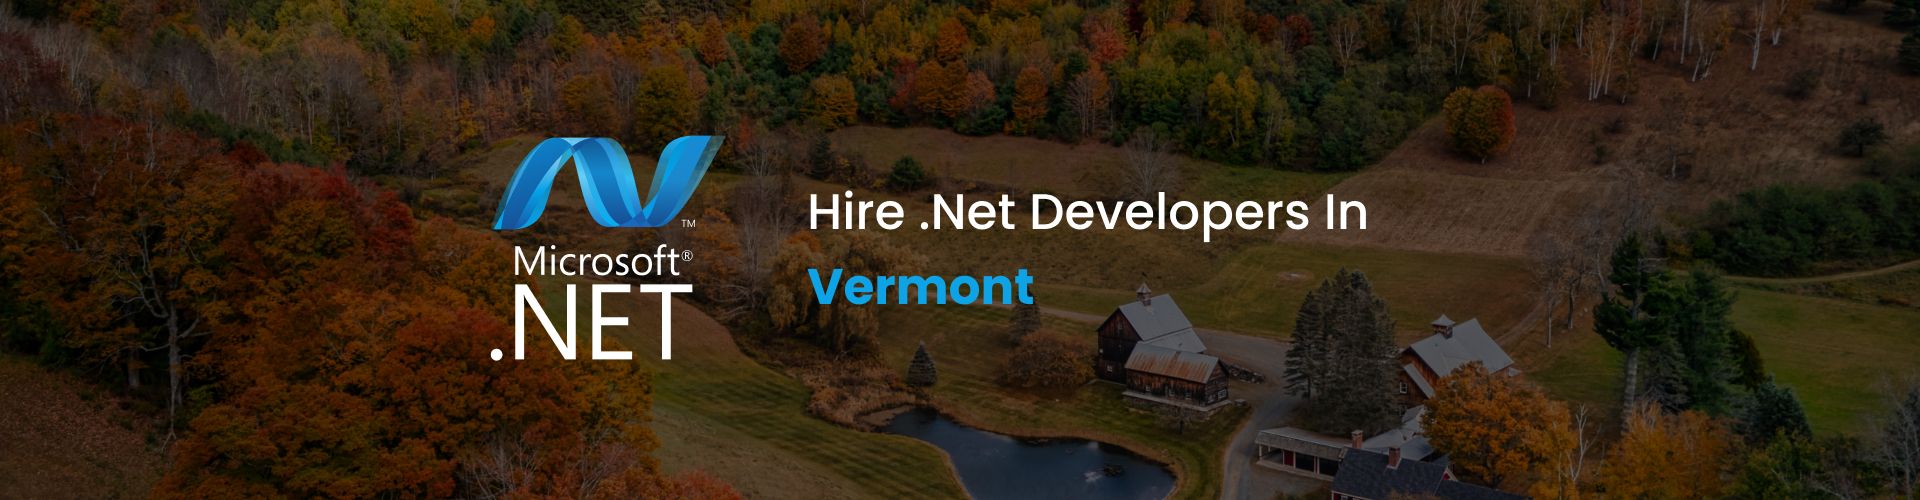 hire dot net developers vermont